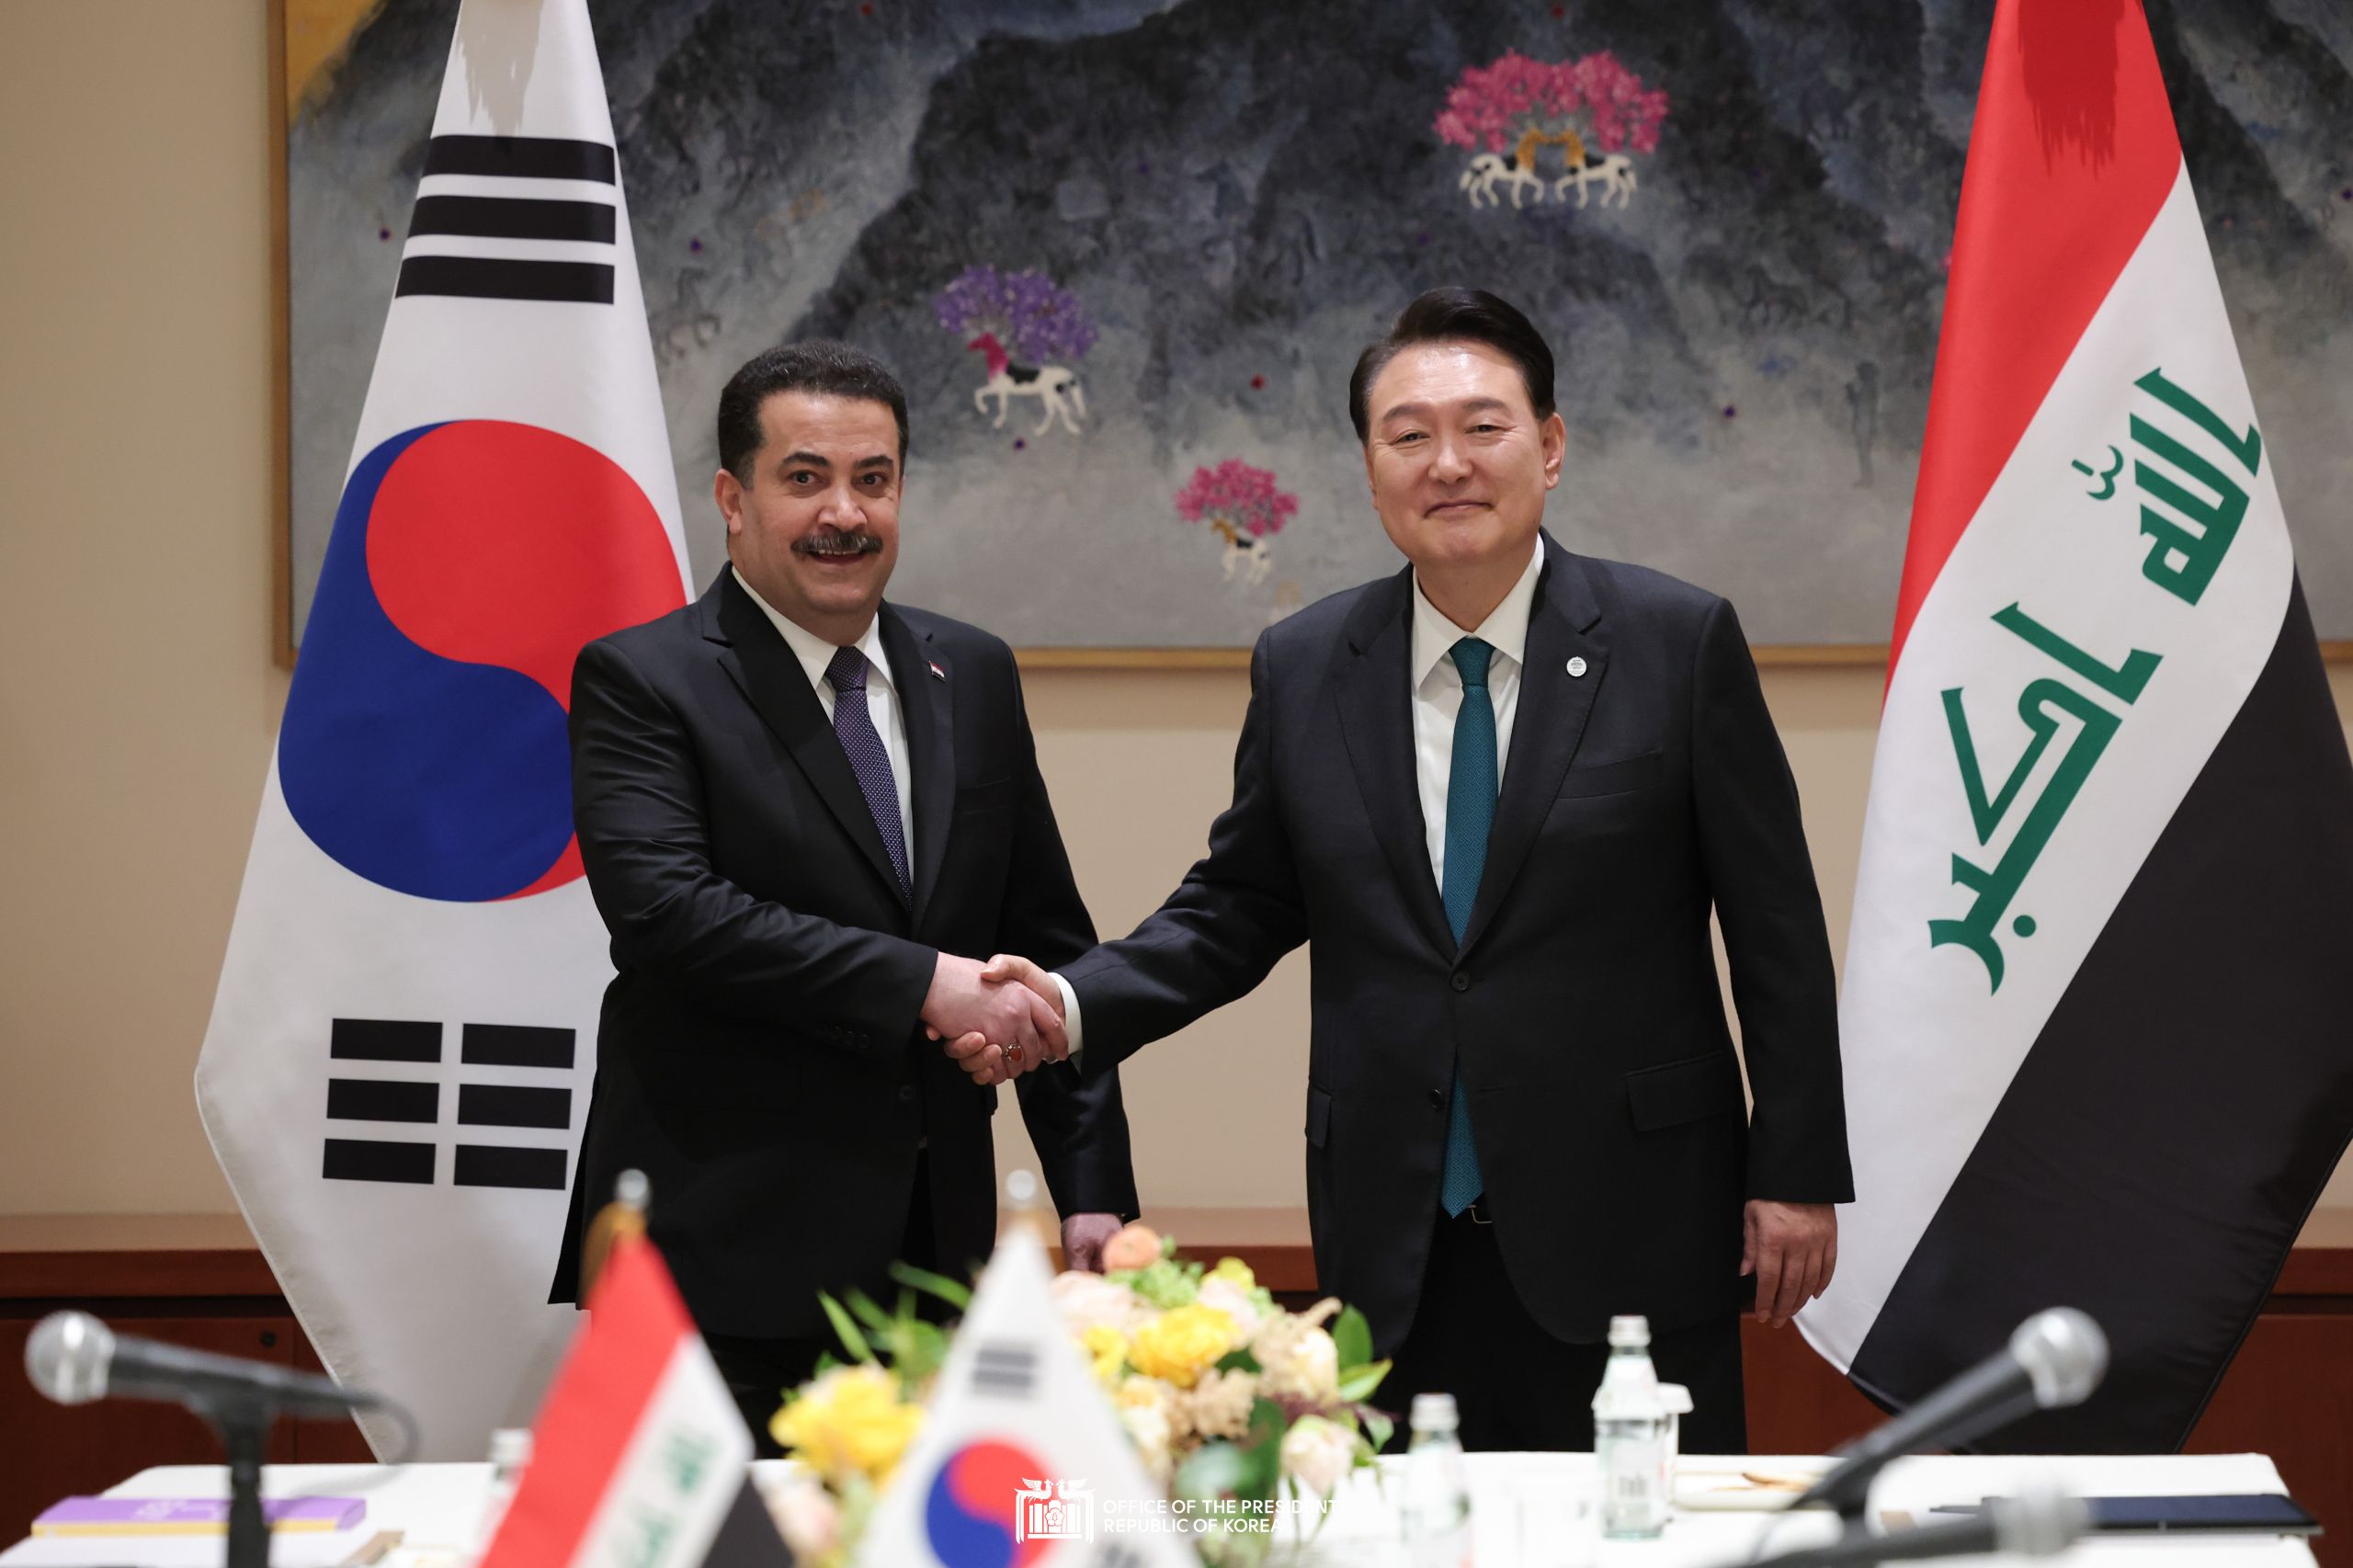 Korea-Iraq Summit in New York slide 1